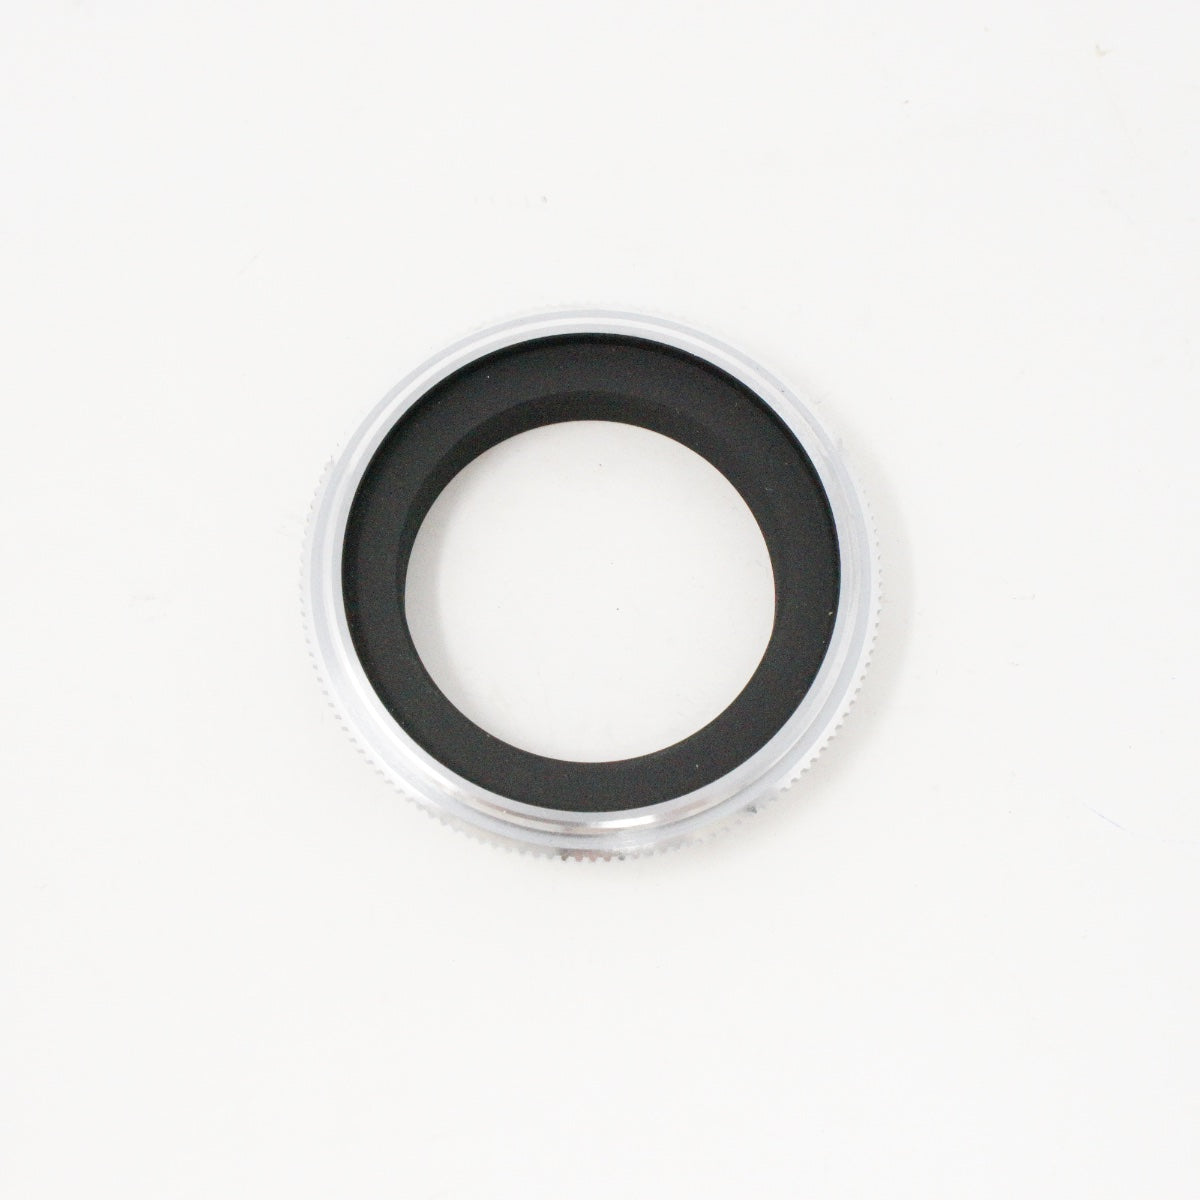 Used Minolta Reverse Ring II for Macro, Minolta MD\